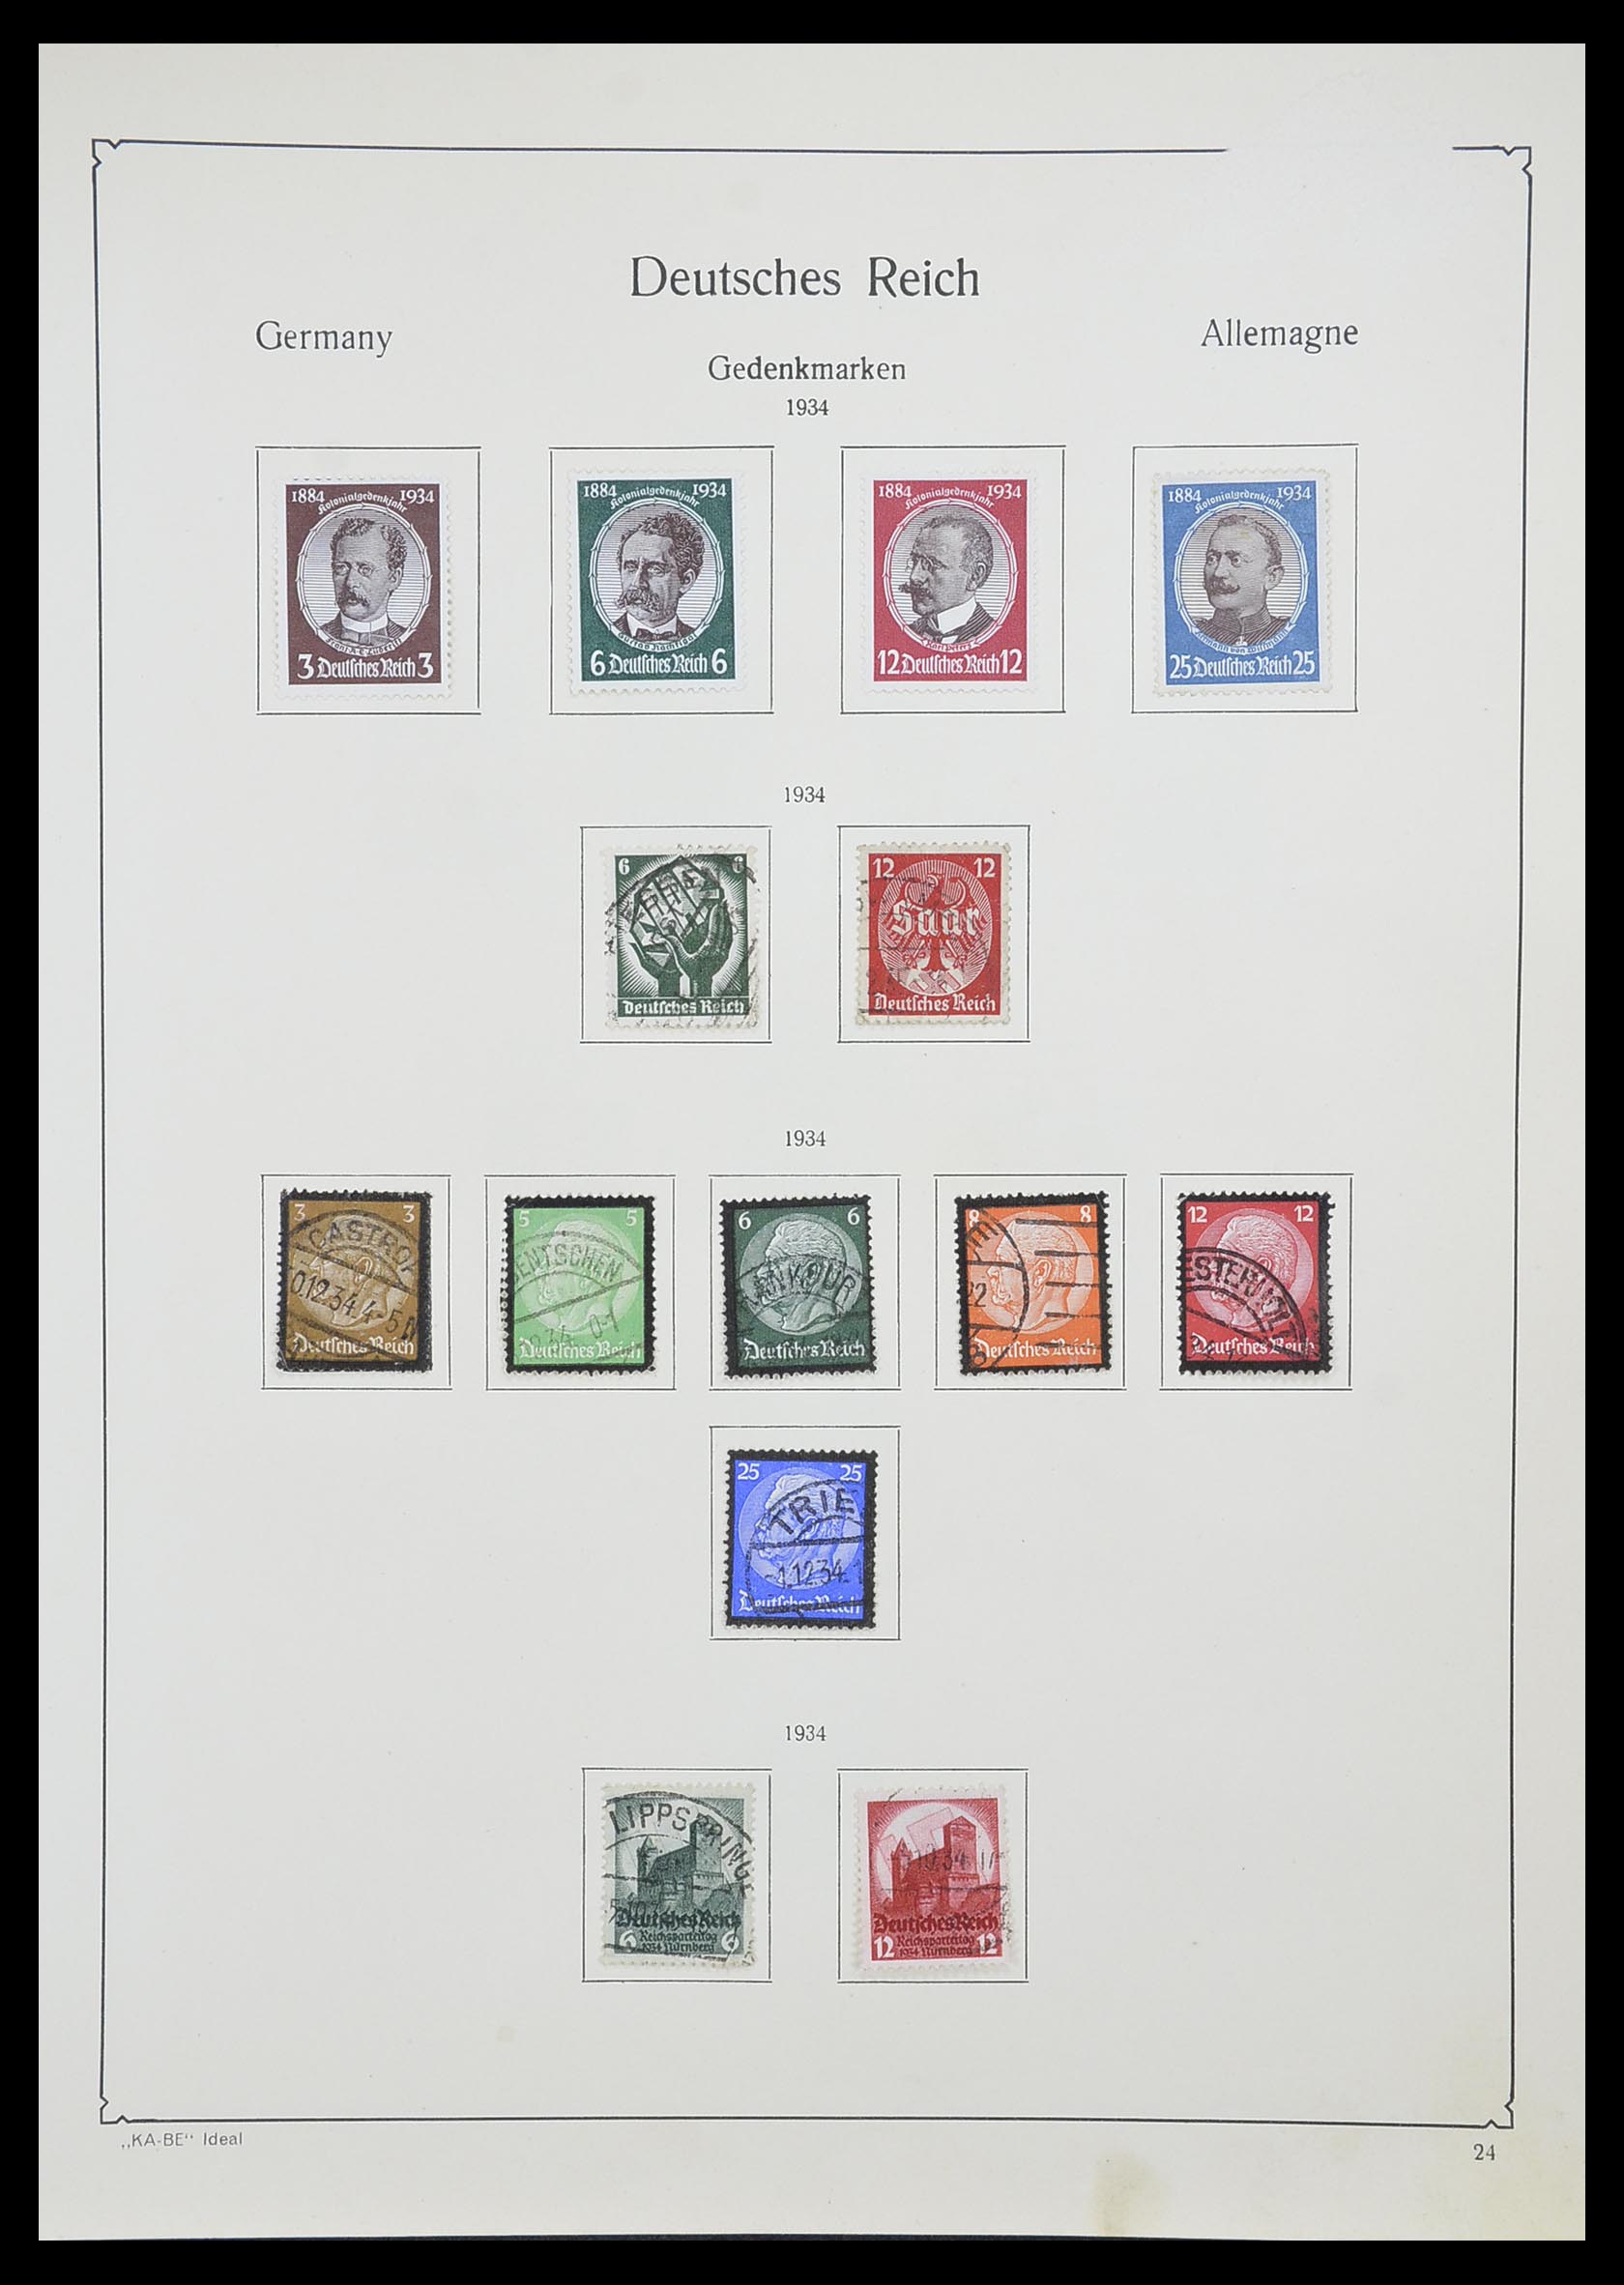 33359 031 - Stamp collection 33359 German Reich 1872-1945.